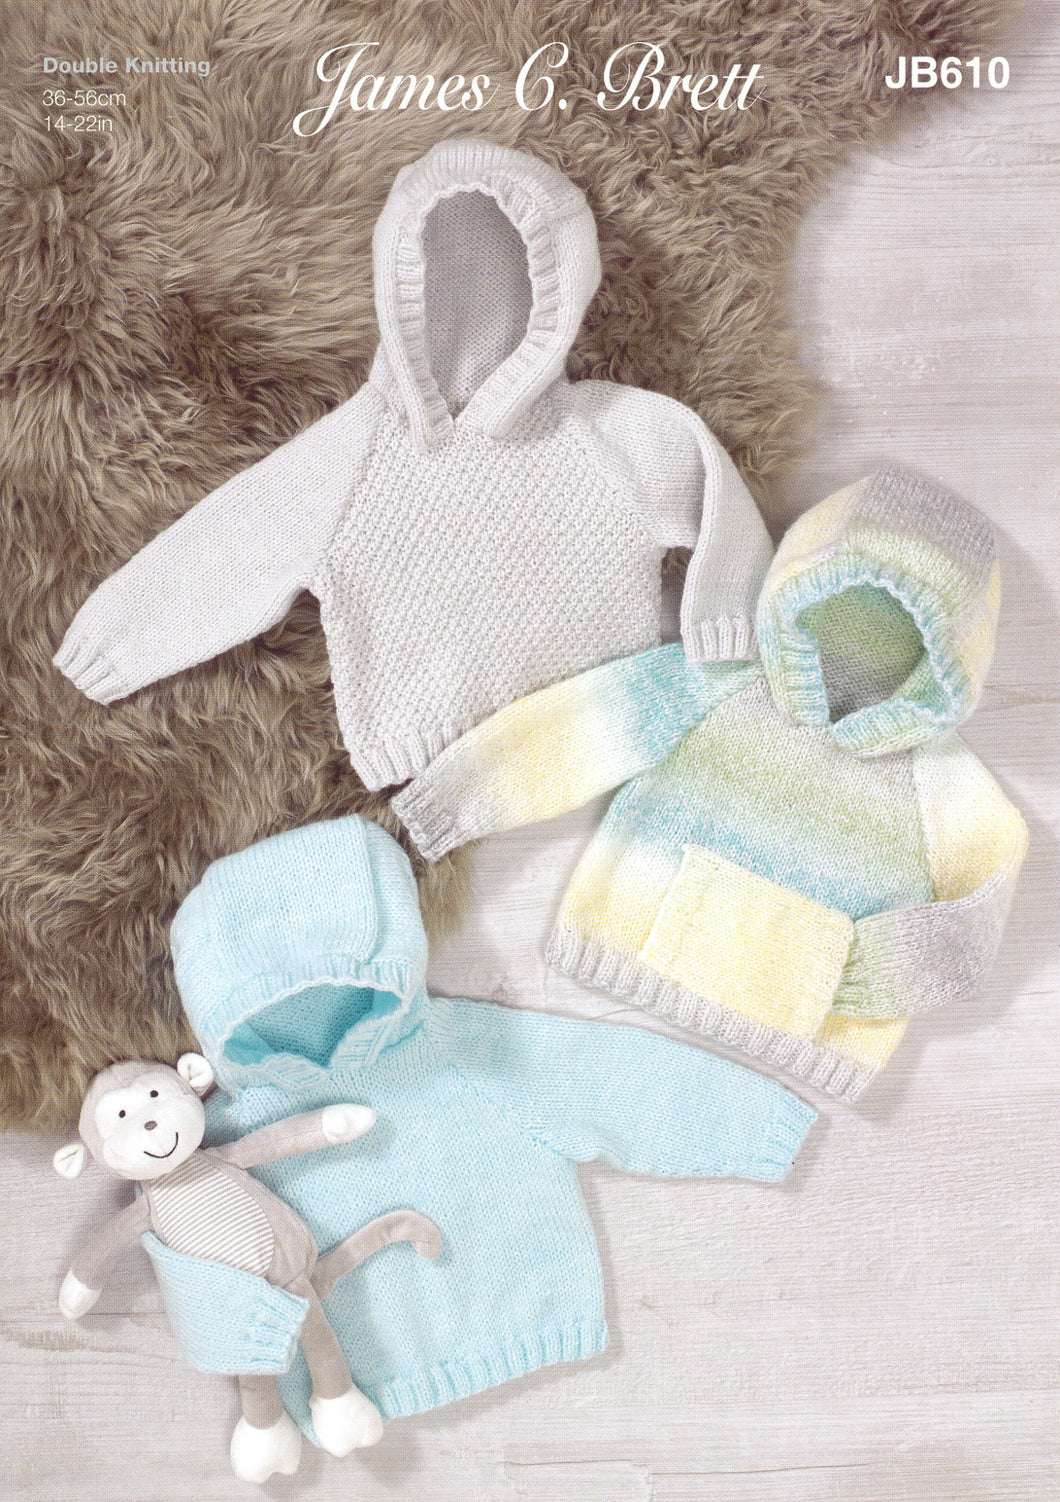 James Brett Double Knitting Pattern - Baby Hoodies (JB610)